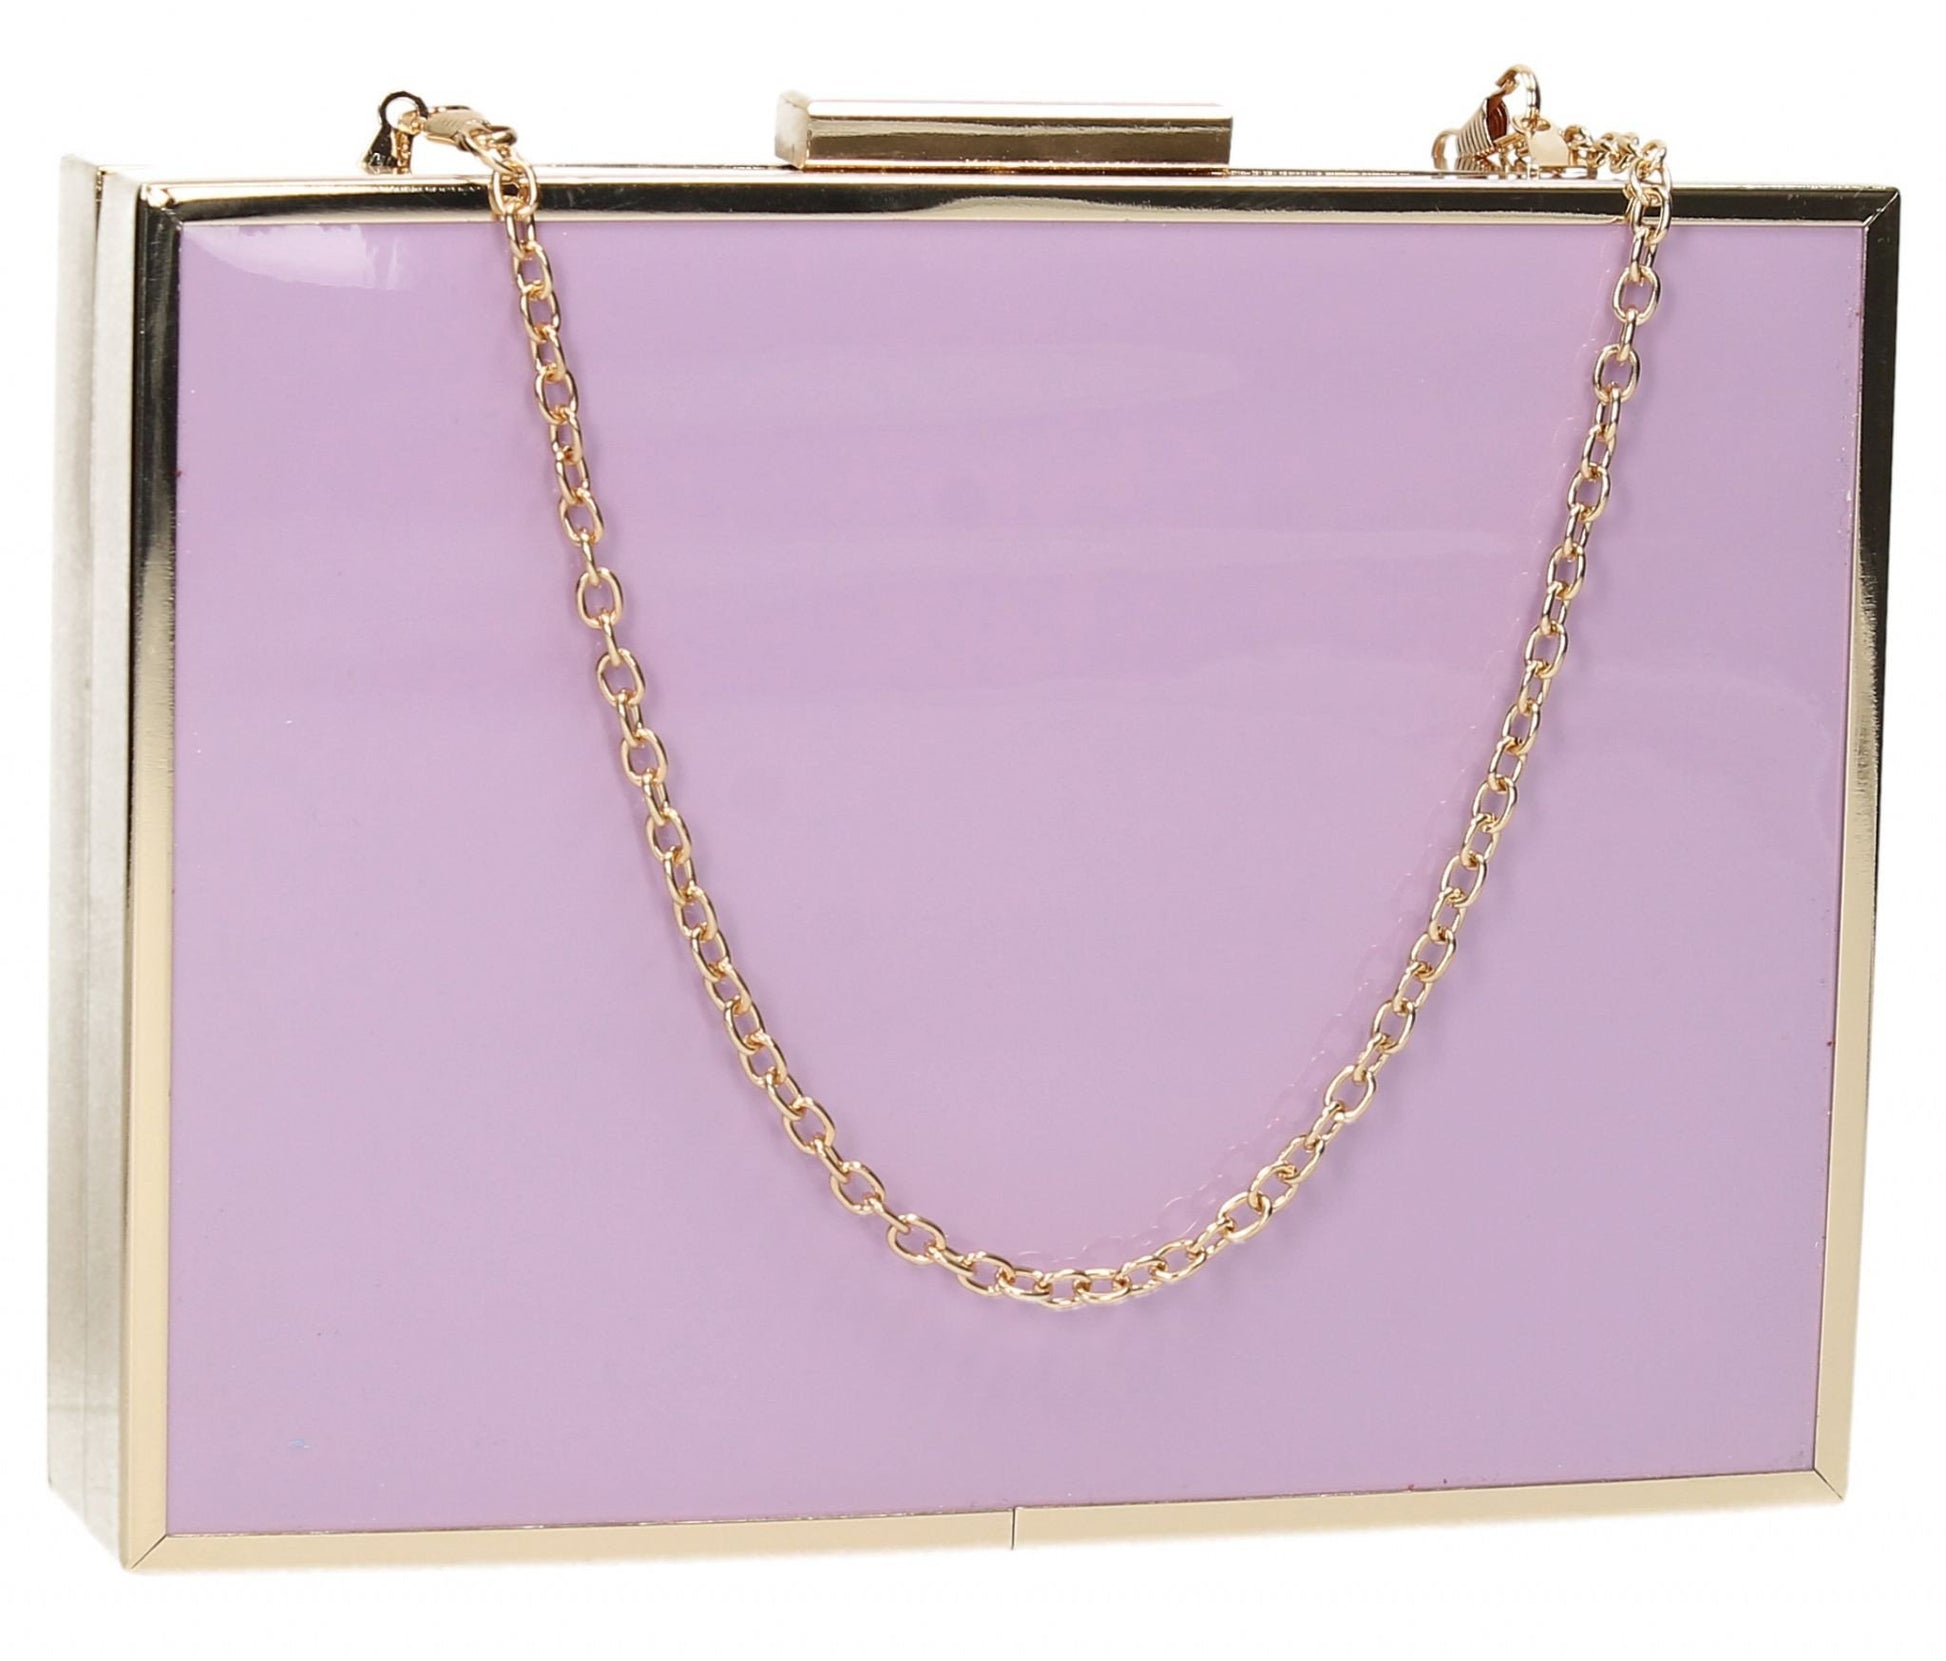 SWANKYSWANS Kate Box Clutch Bag Lilac Cute Cheap Clutch Bag For Weddings School and Work